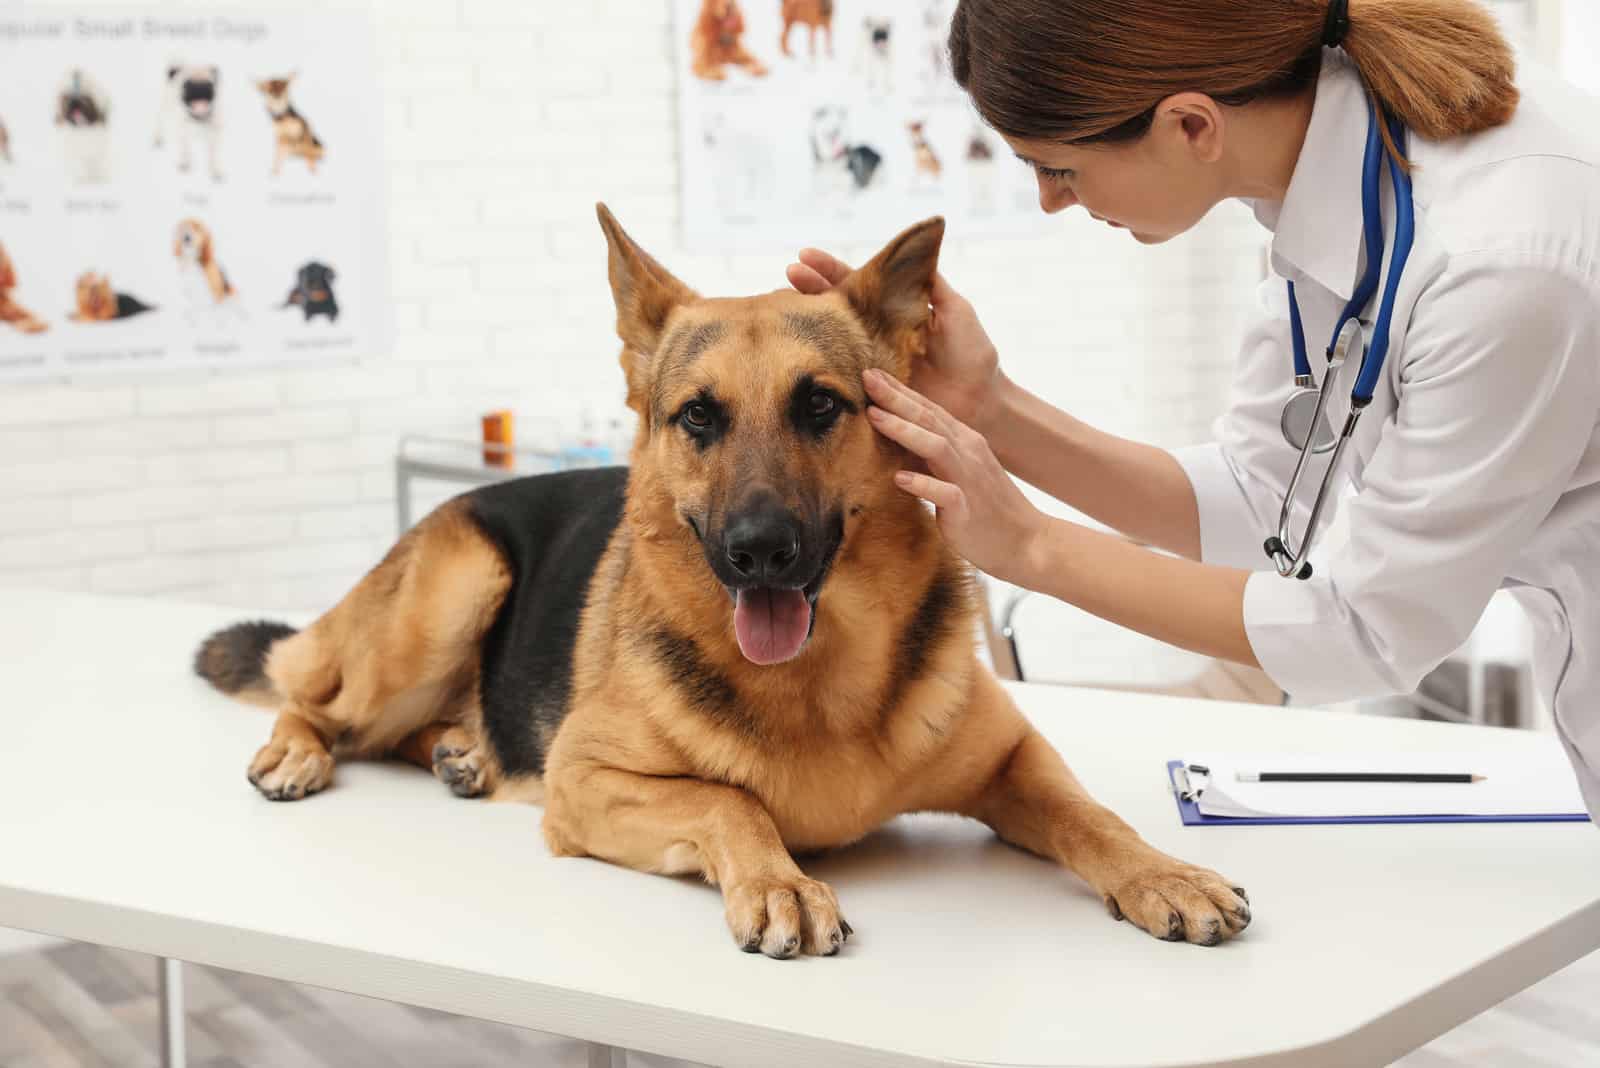 Professional veterinarian examining dog